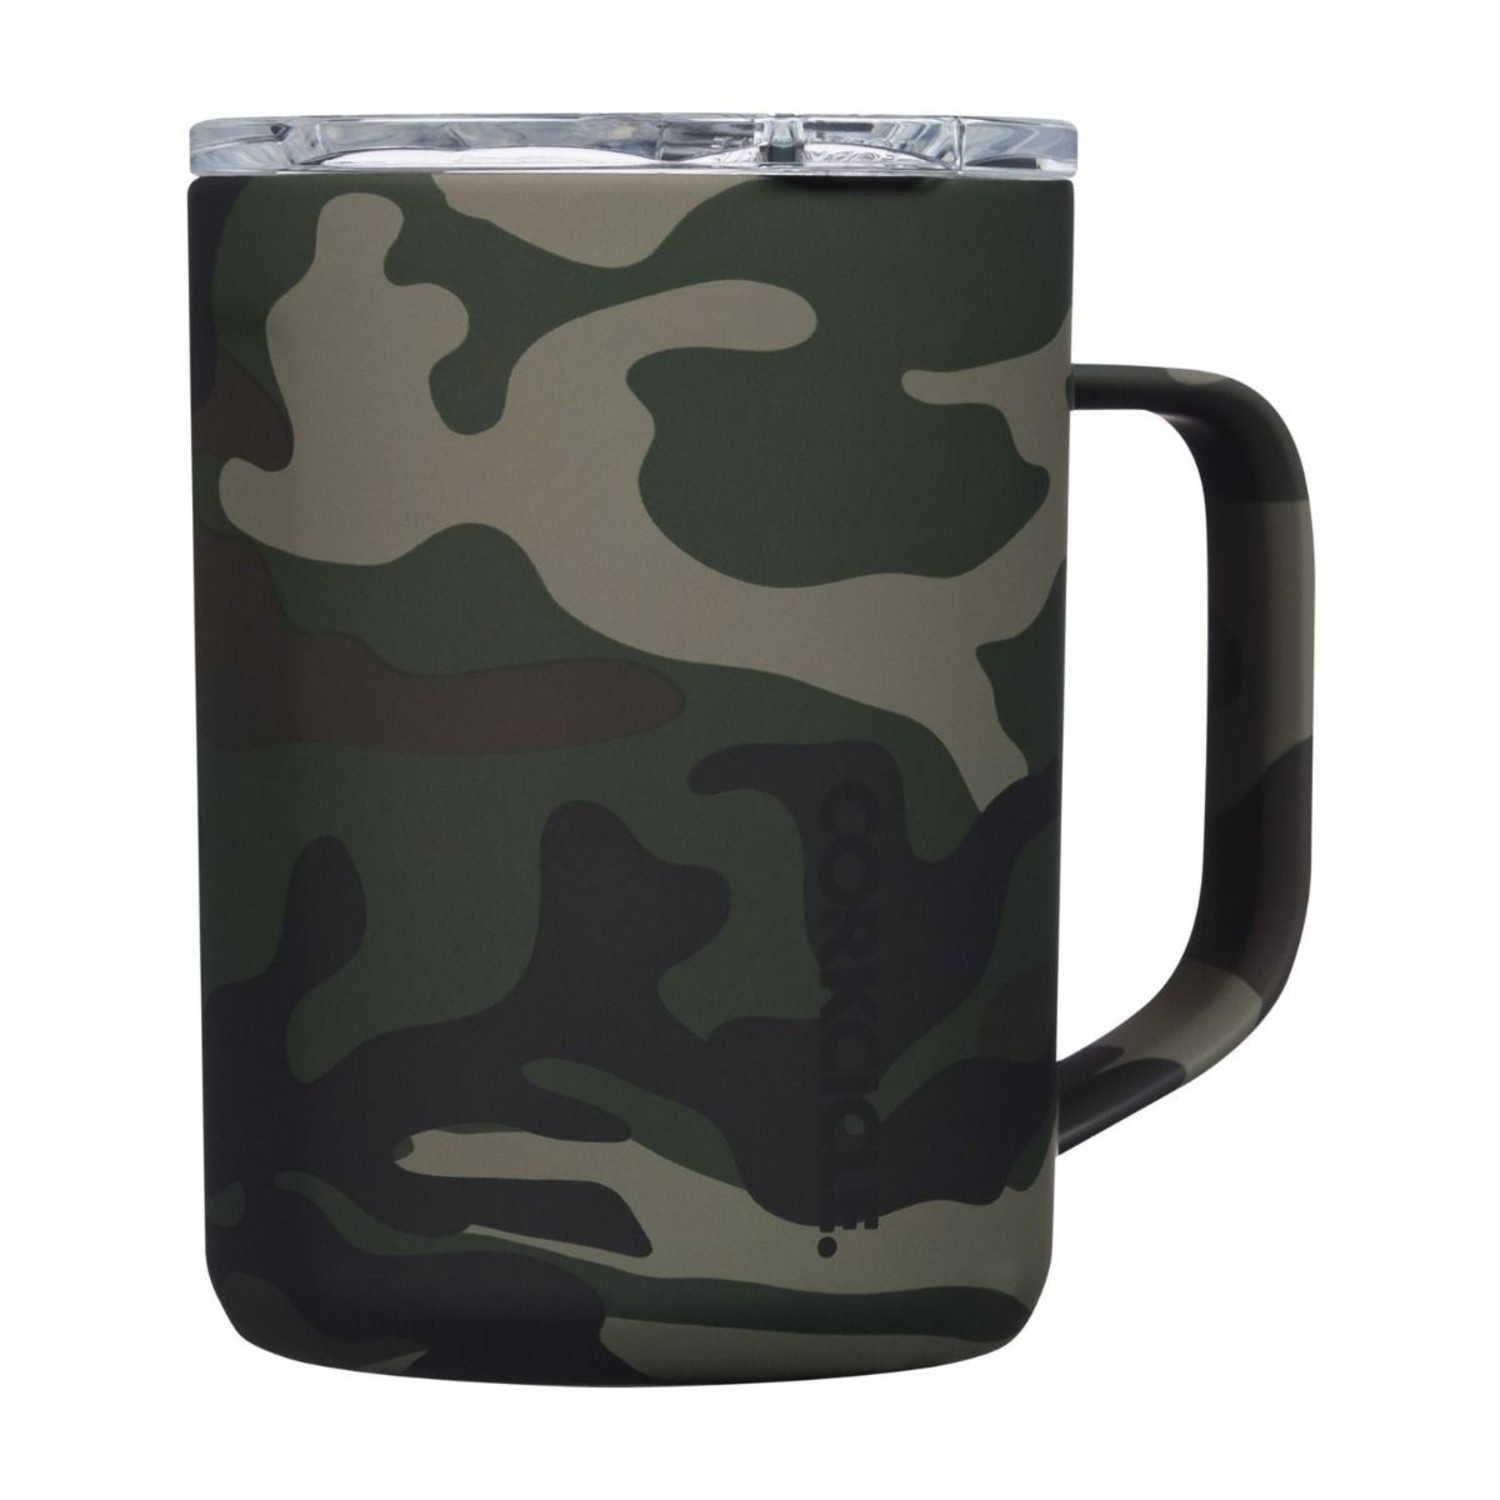  Color Banded Classic Coffee Cup - Camo - 16 oz. 111150-CAMO